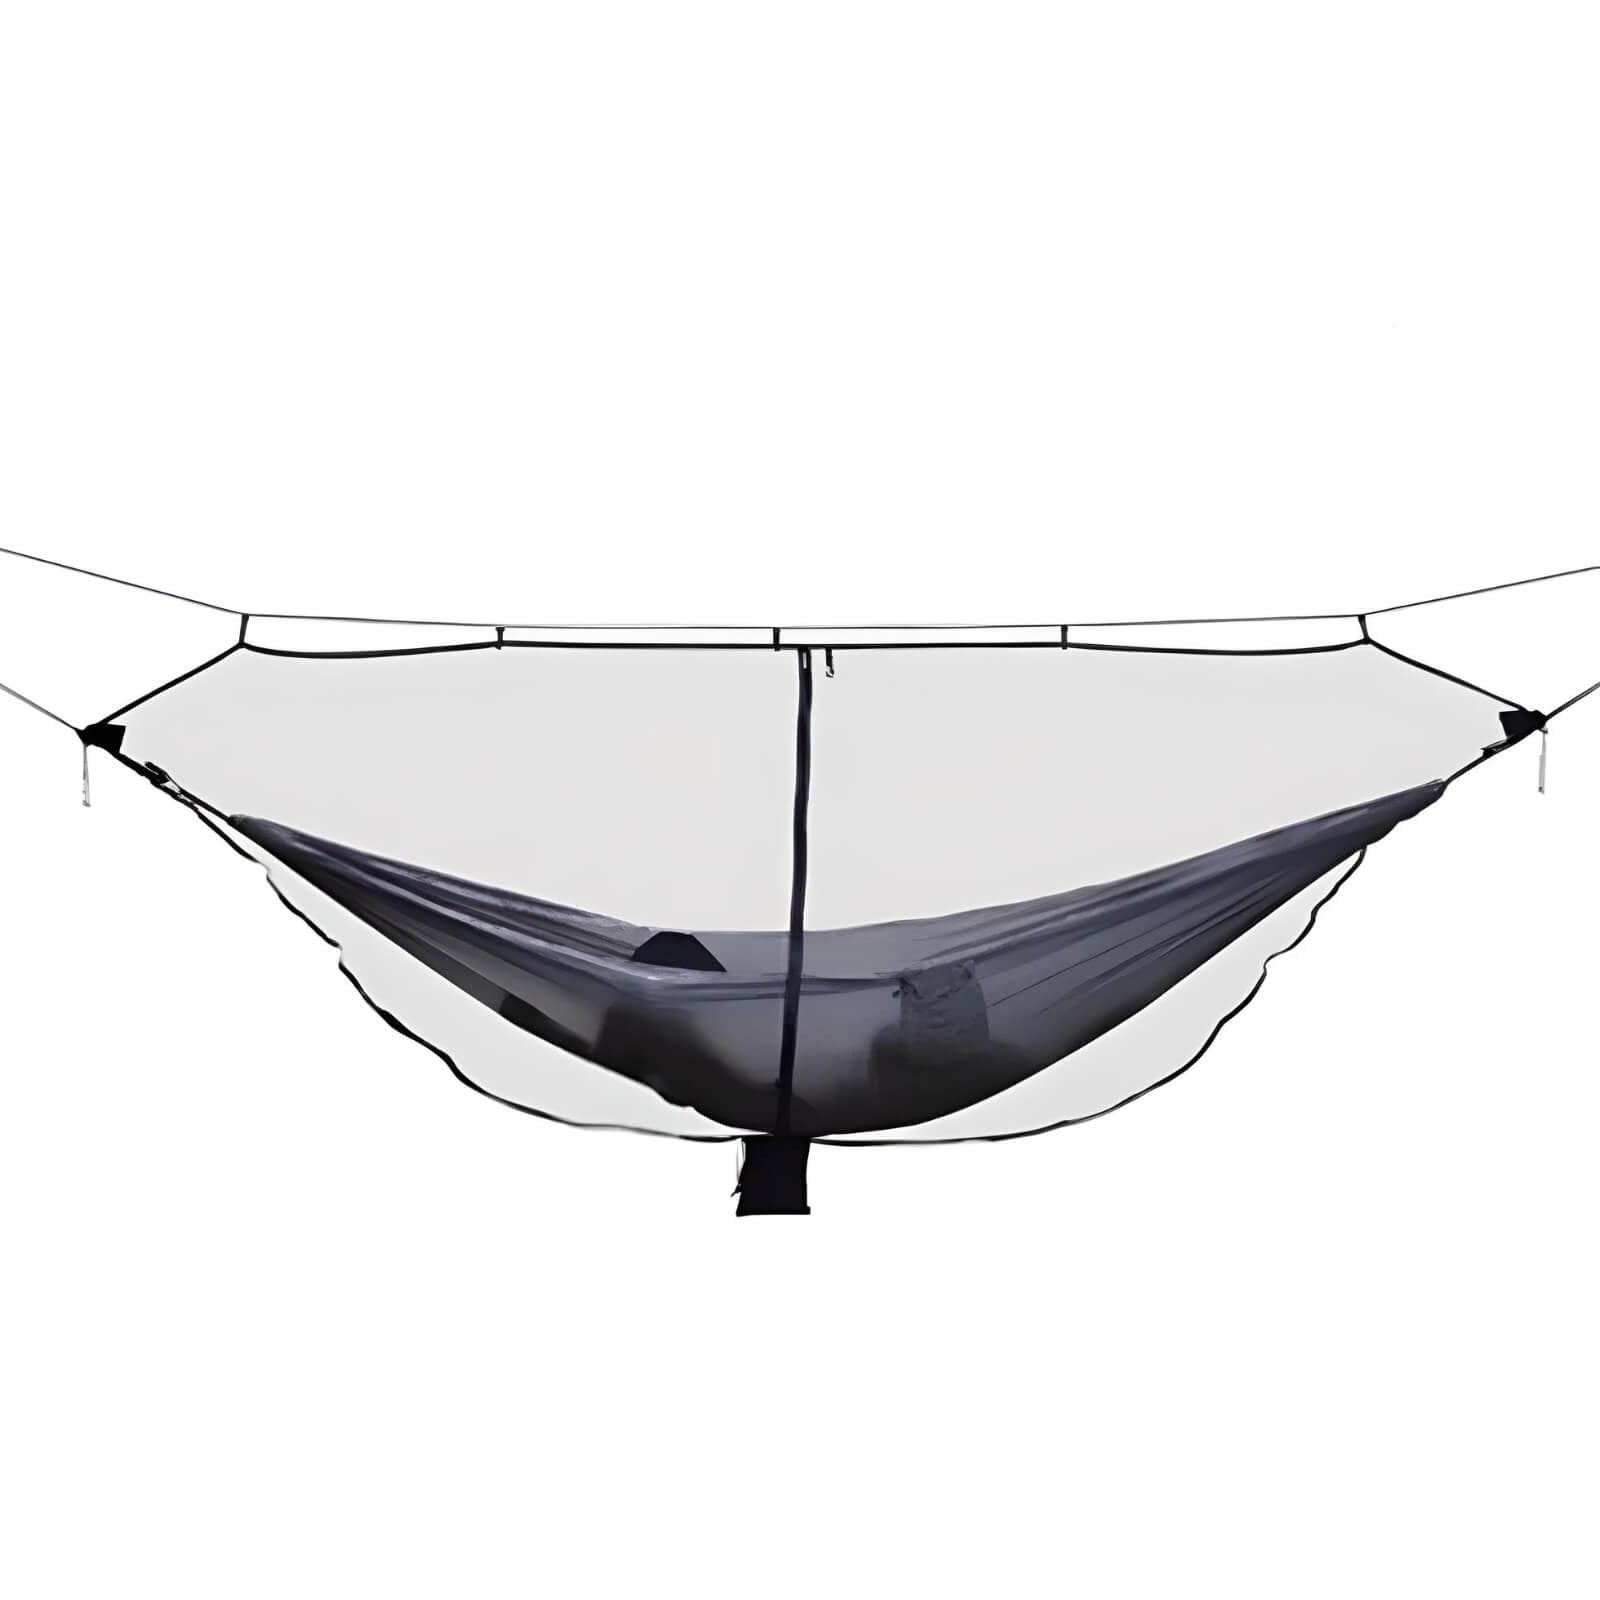 hammock-with-bug-screen-separate-hammock-mosquito-net